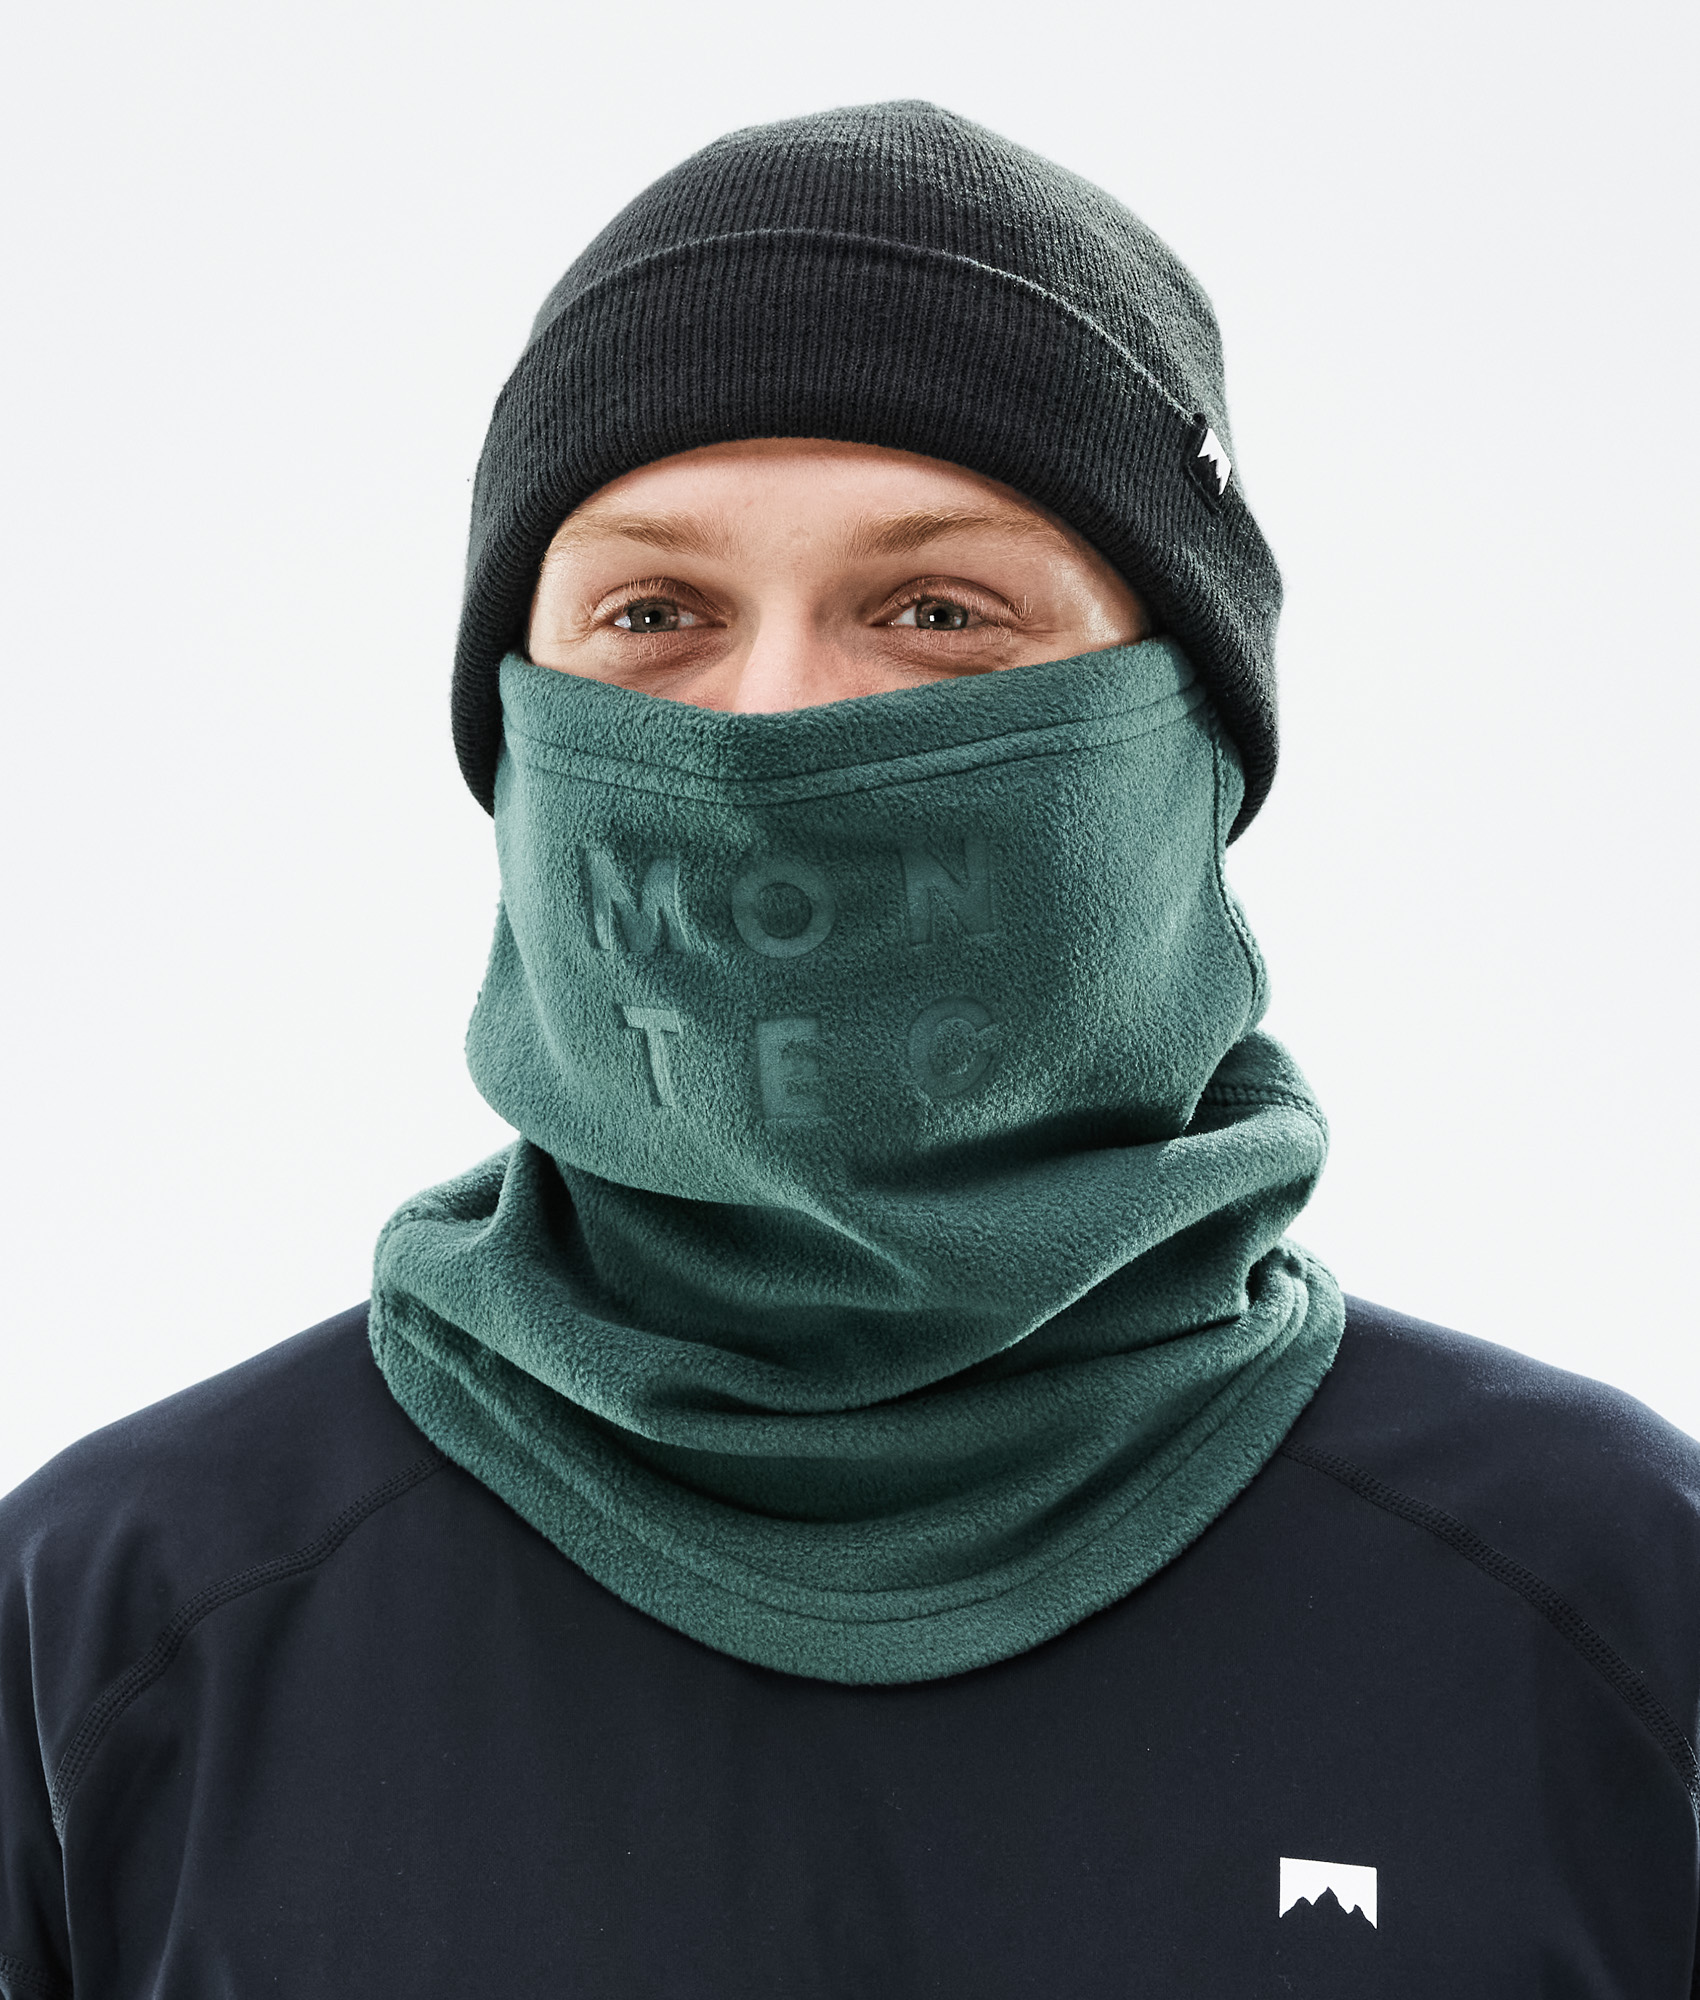 Neck Gaiter Tube Mask Spinone Italiano Italy Dog Neck Warmer Gaiter Balaclava Ski Mask Headwear Outdoor Scarf Neckerchief